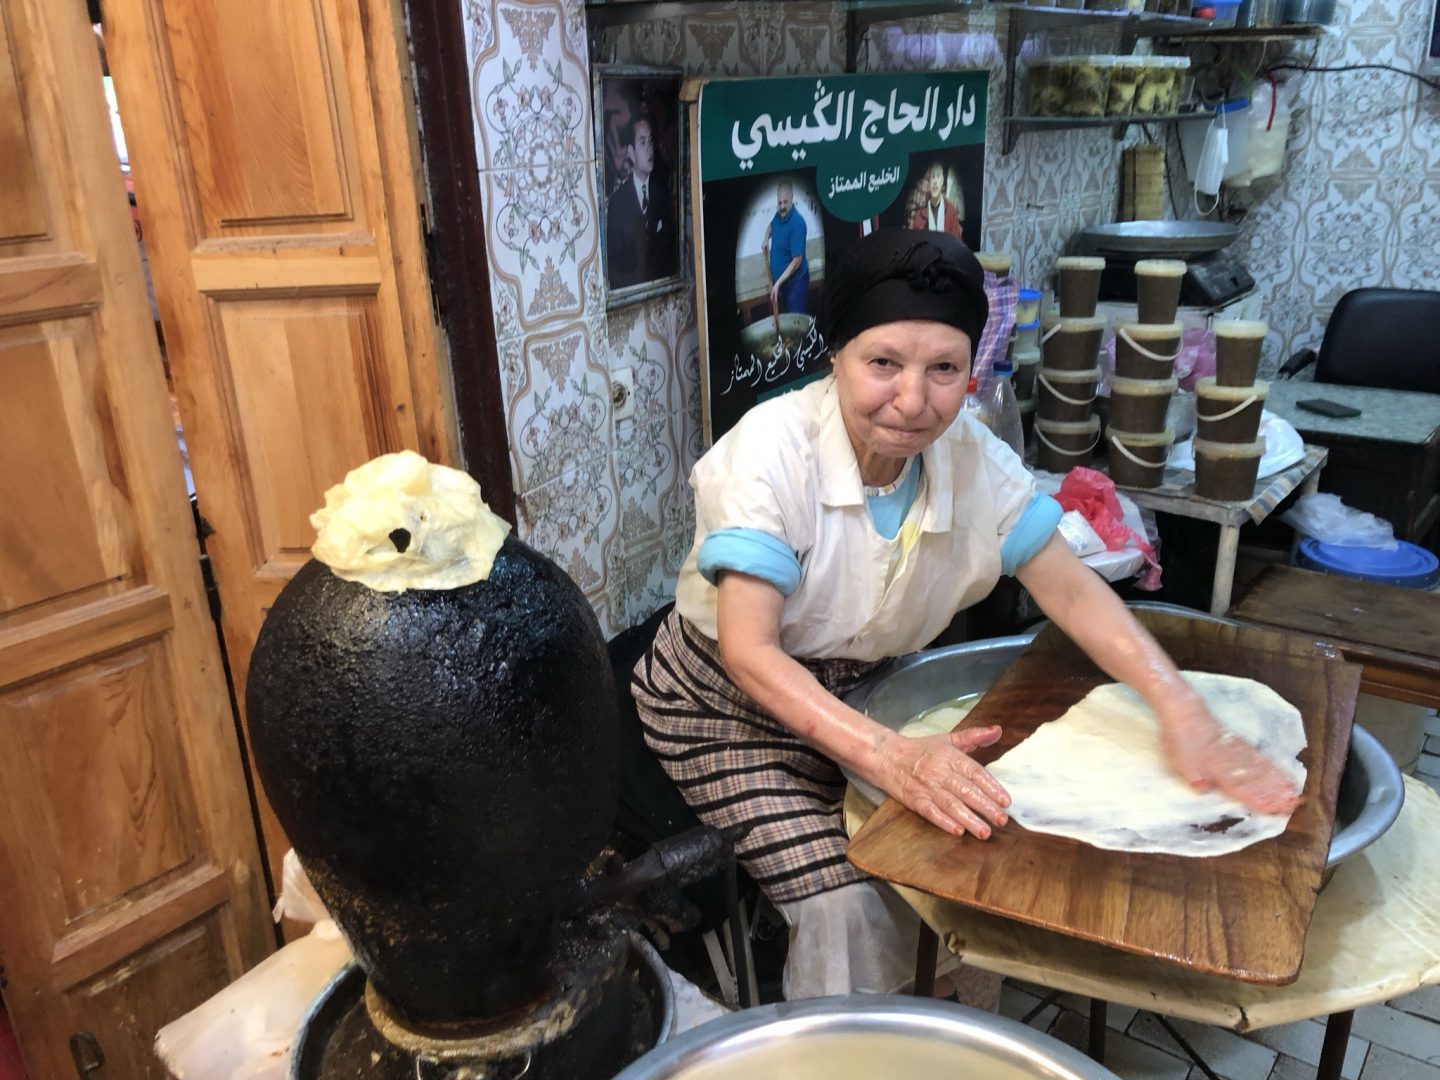 A woman making fresh bread in Fez, Morocco.